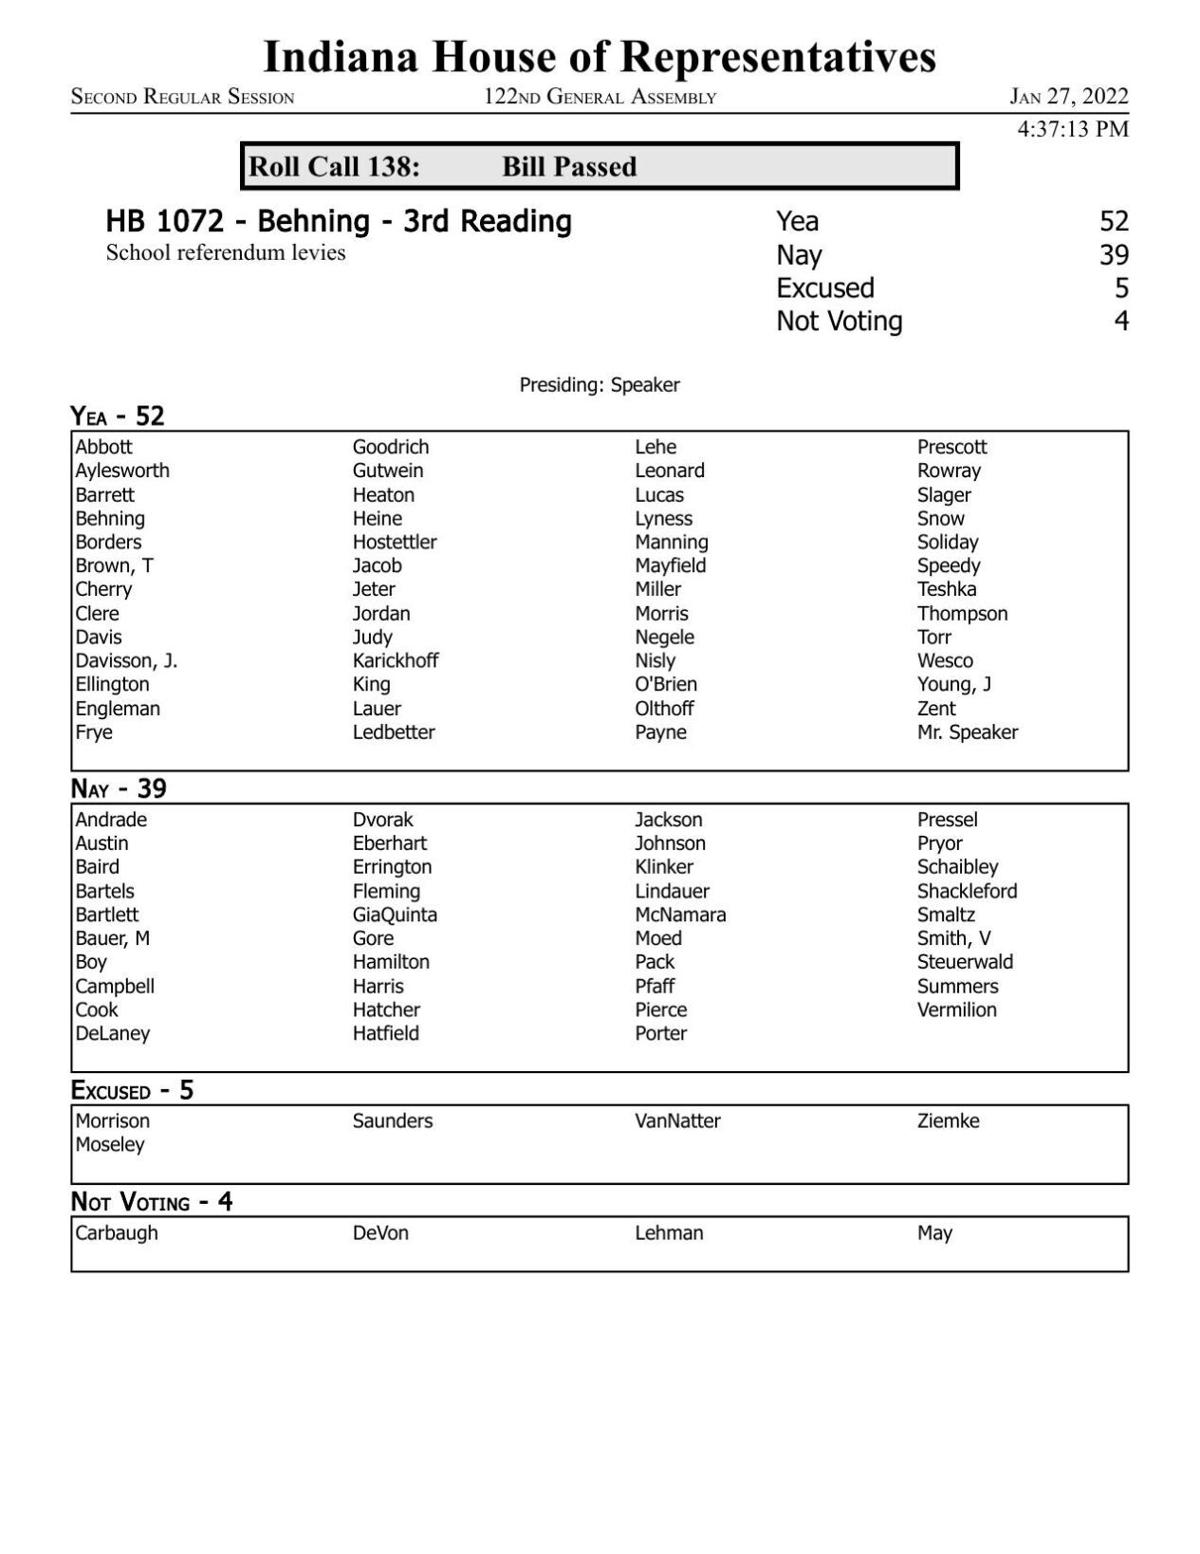 House roll call on House Bill 1072